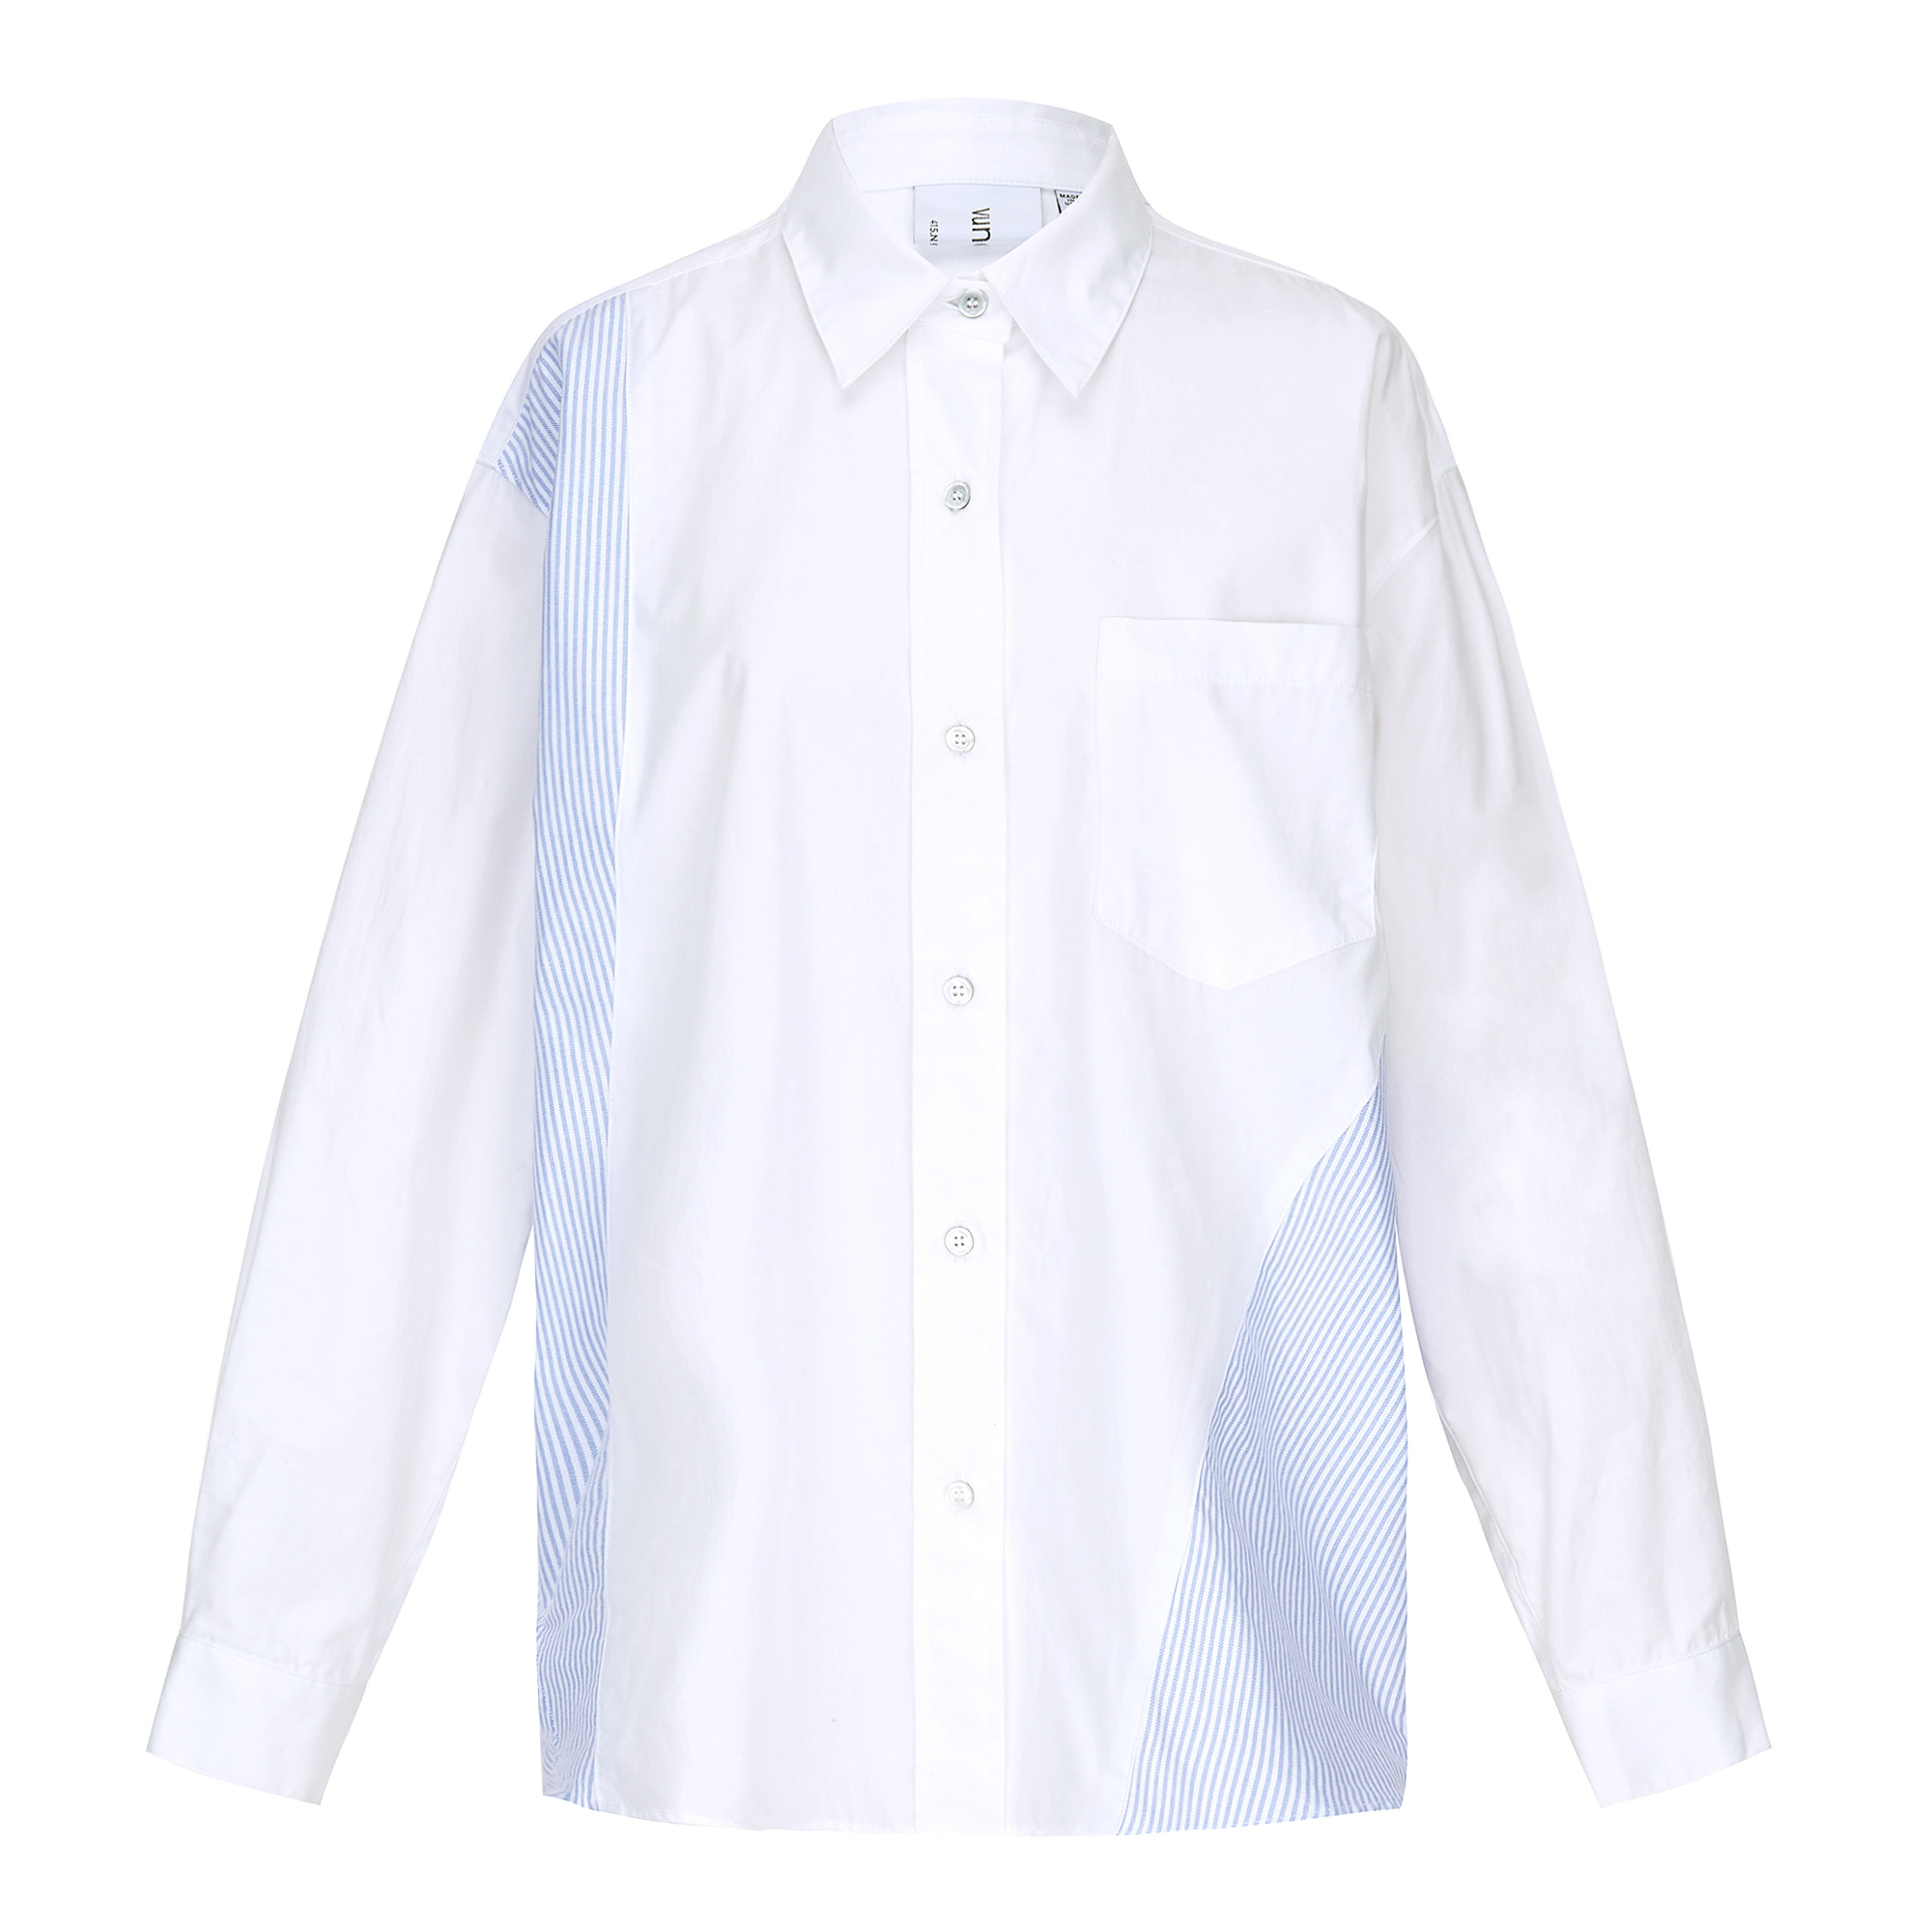 Florella combi pattern shirt (플로렐라 콤비 패턴 셔츠) White